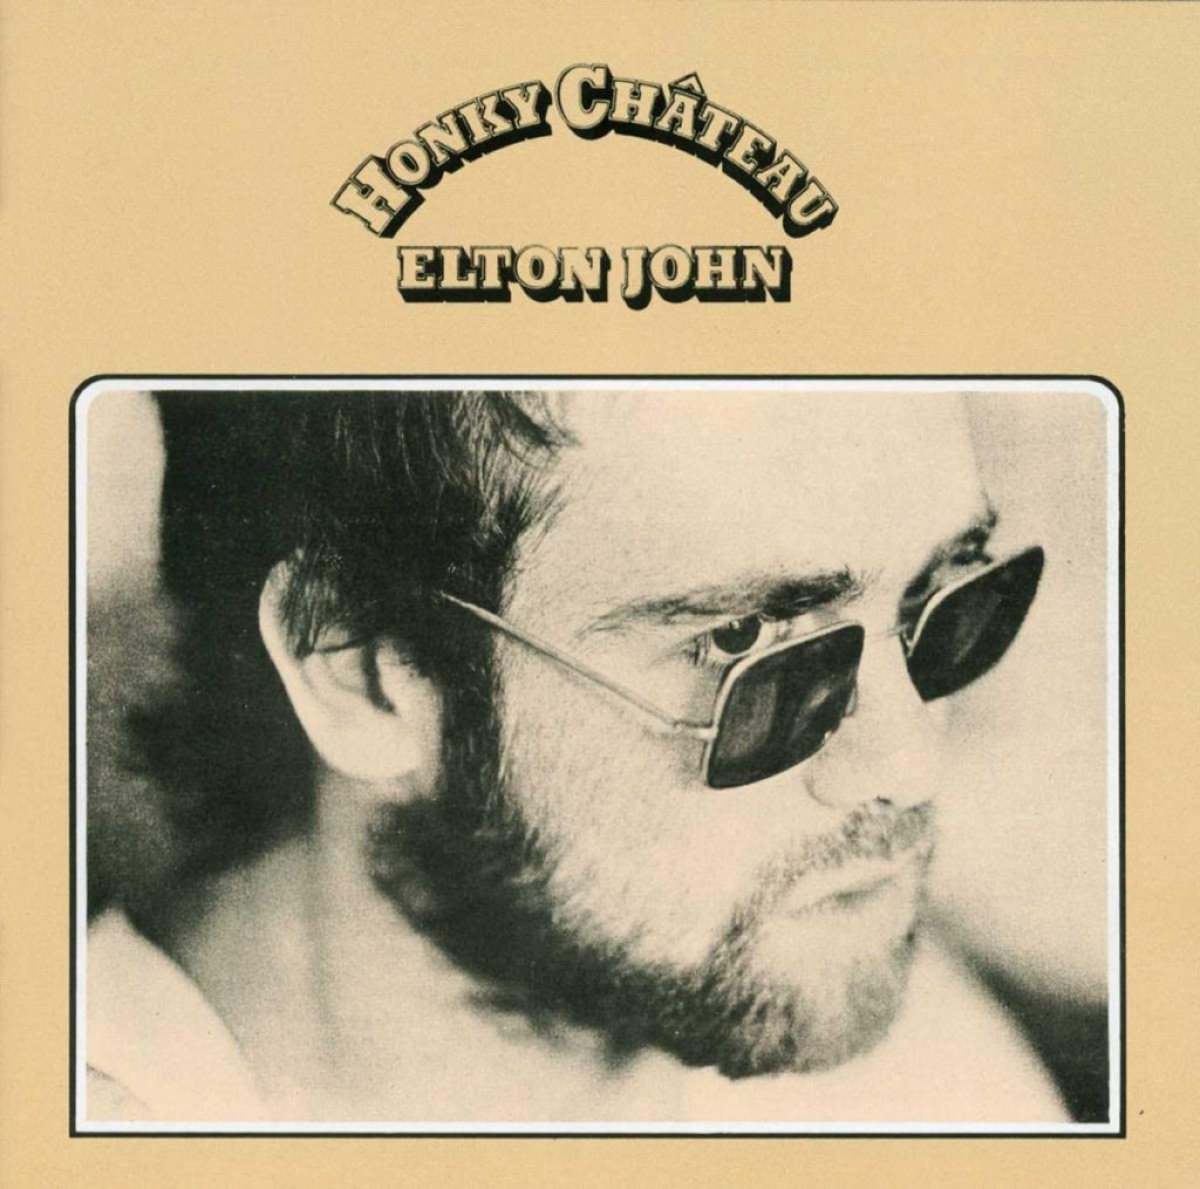 ‘Honky Château’ – Elton John